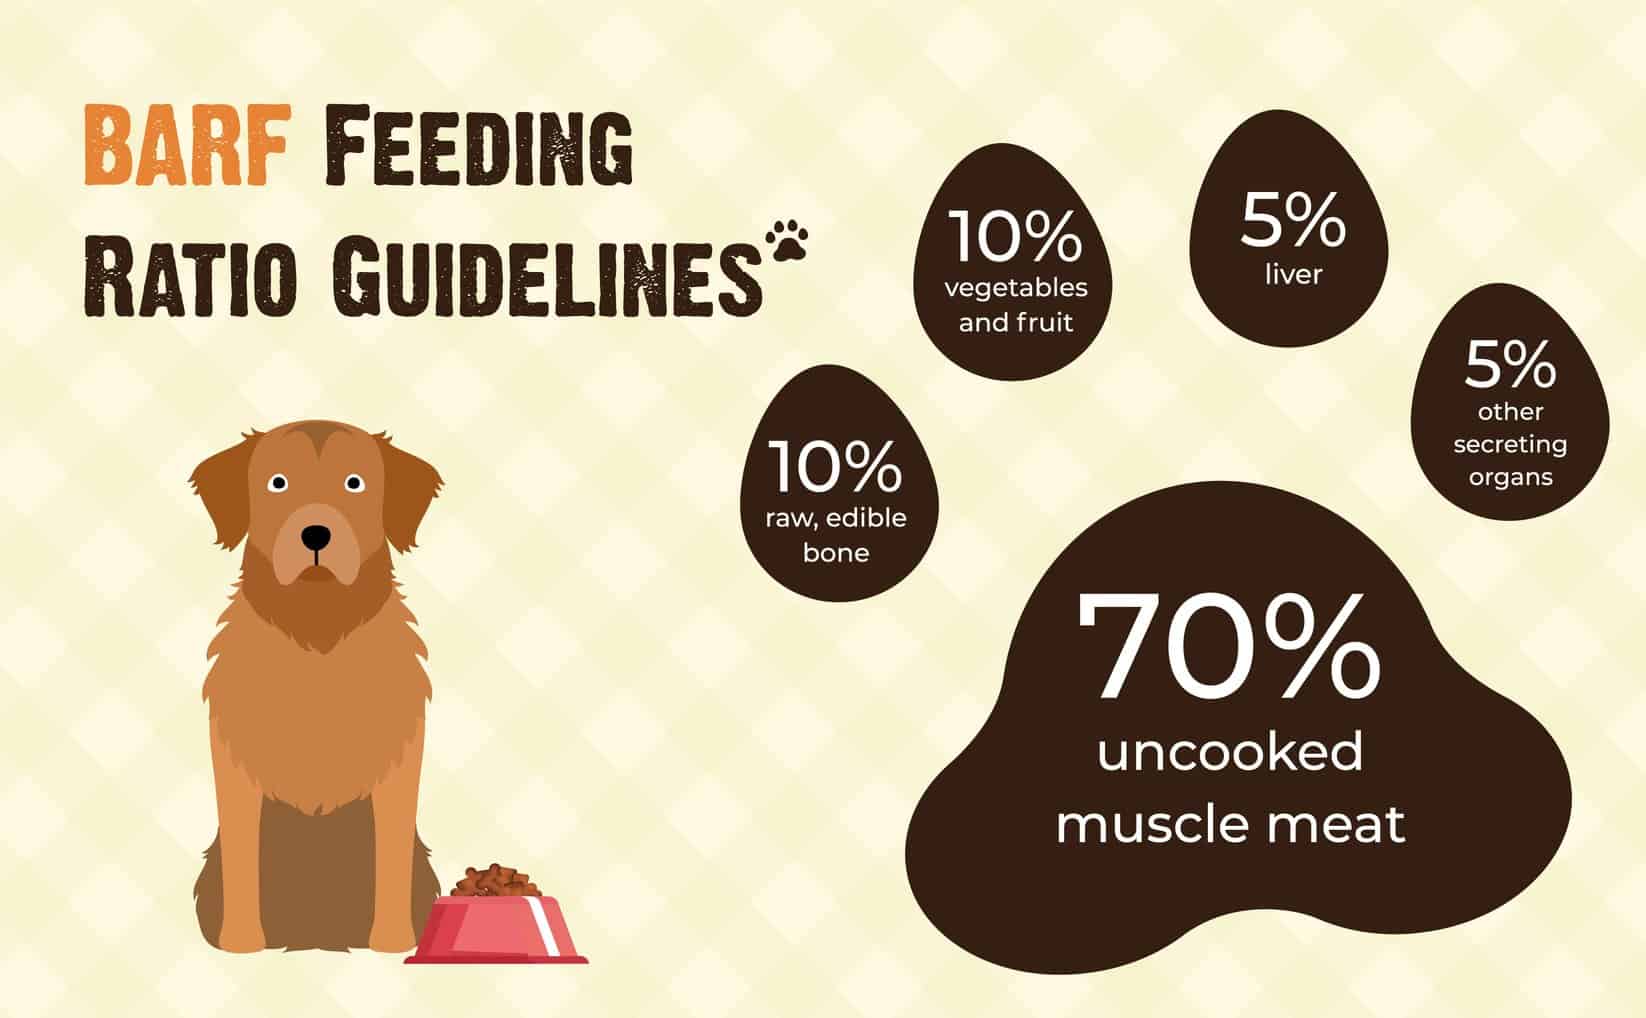 barf feeding ratio guidelines